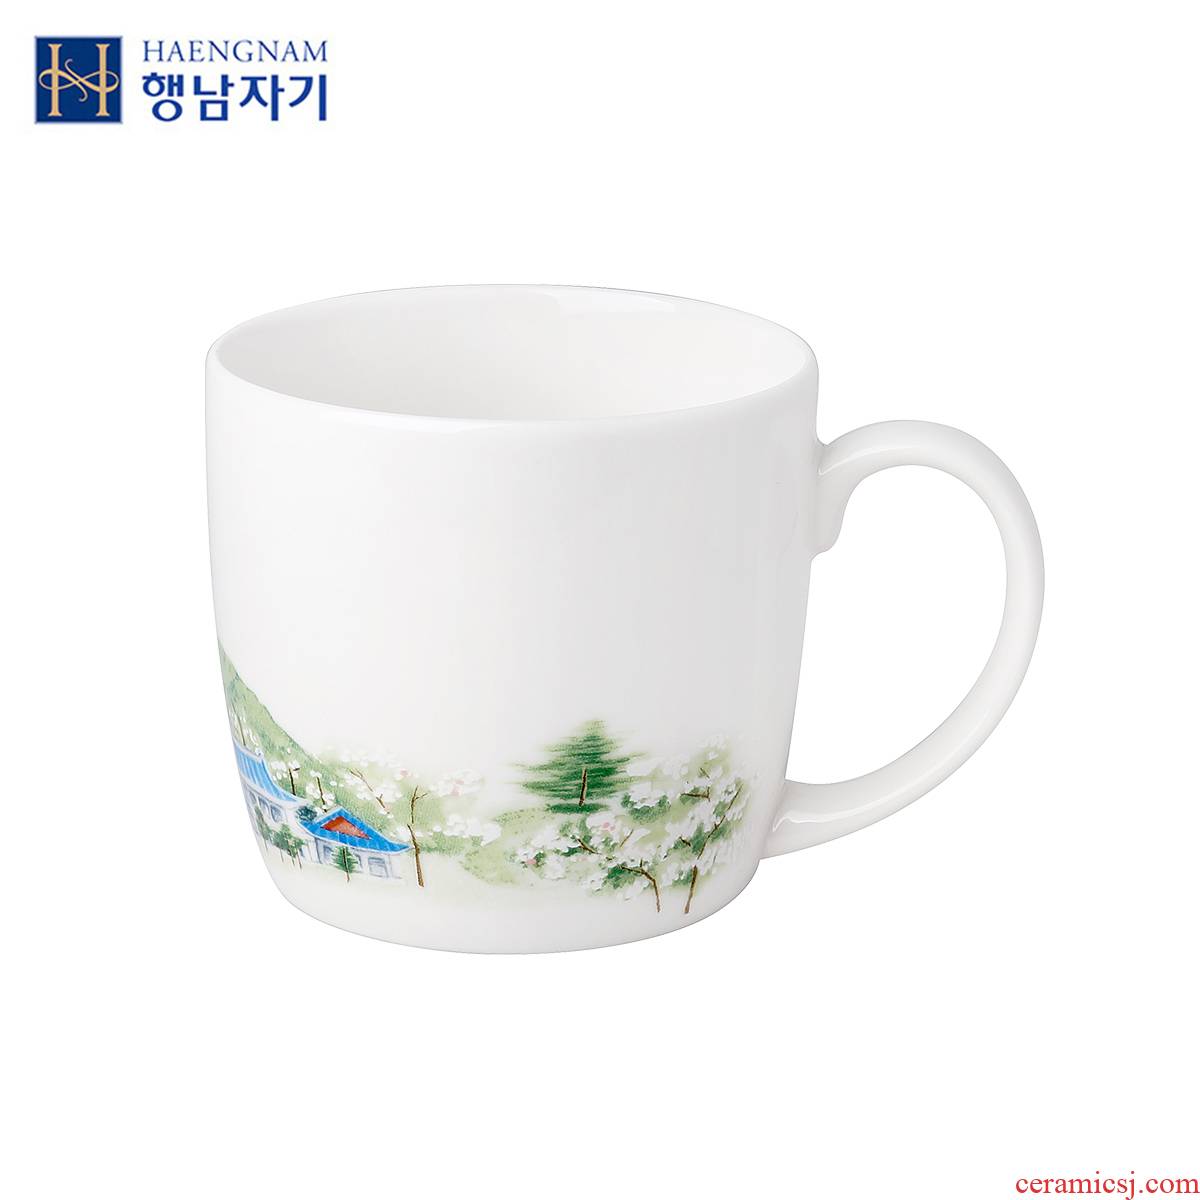 HAENGNAM Han Guoxing blue house south porcelain keller ceramic glass/cup/ultimately responds. A cup of milk